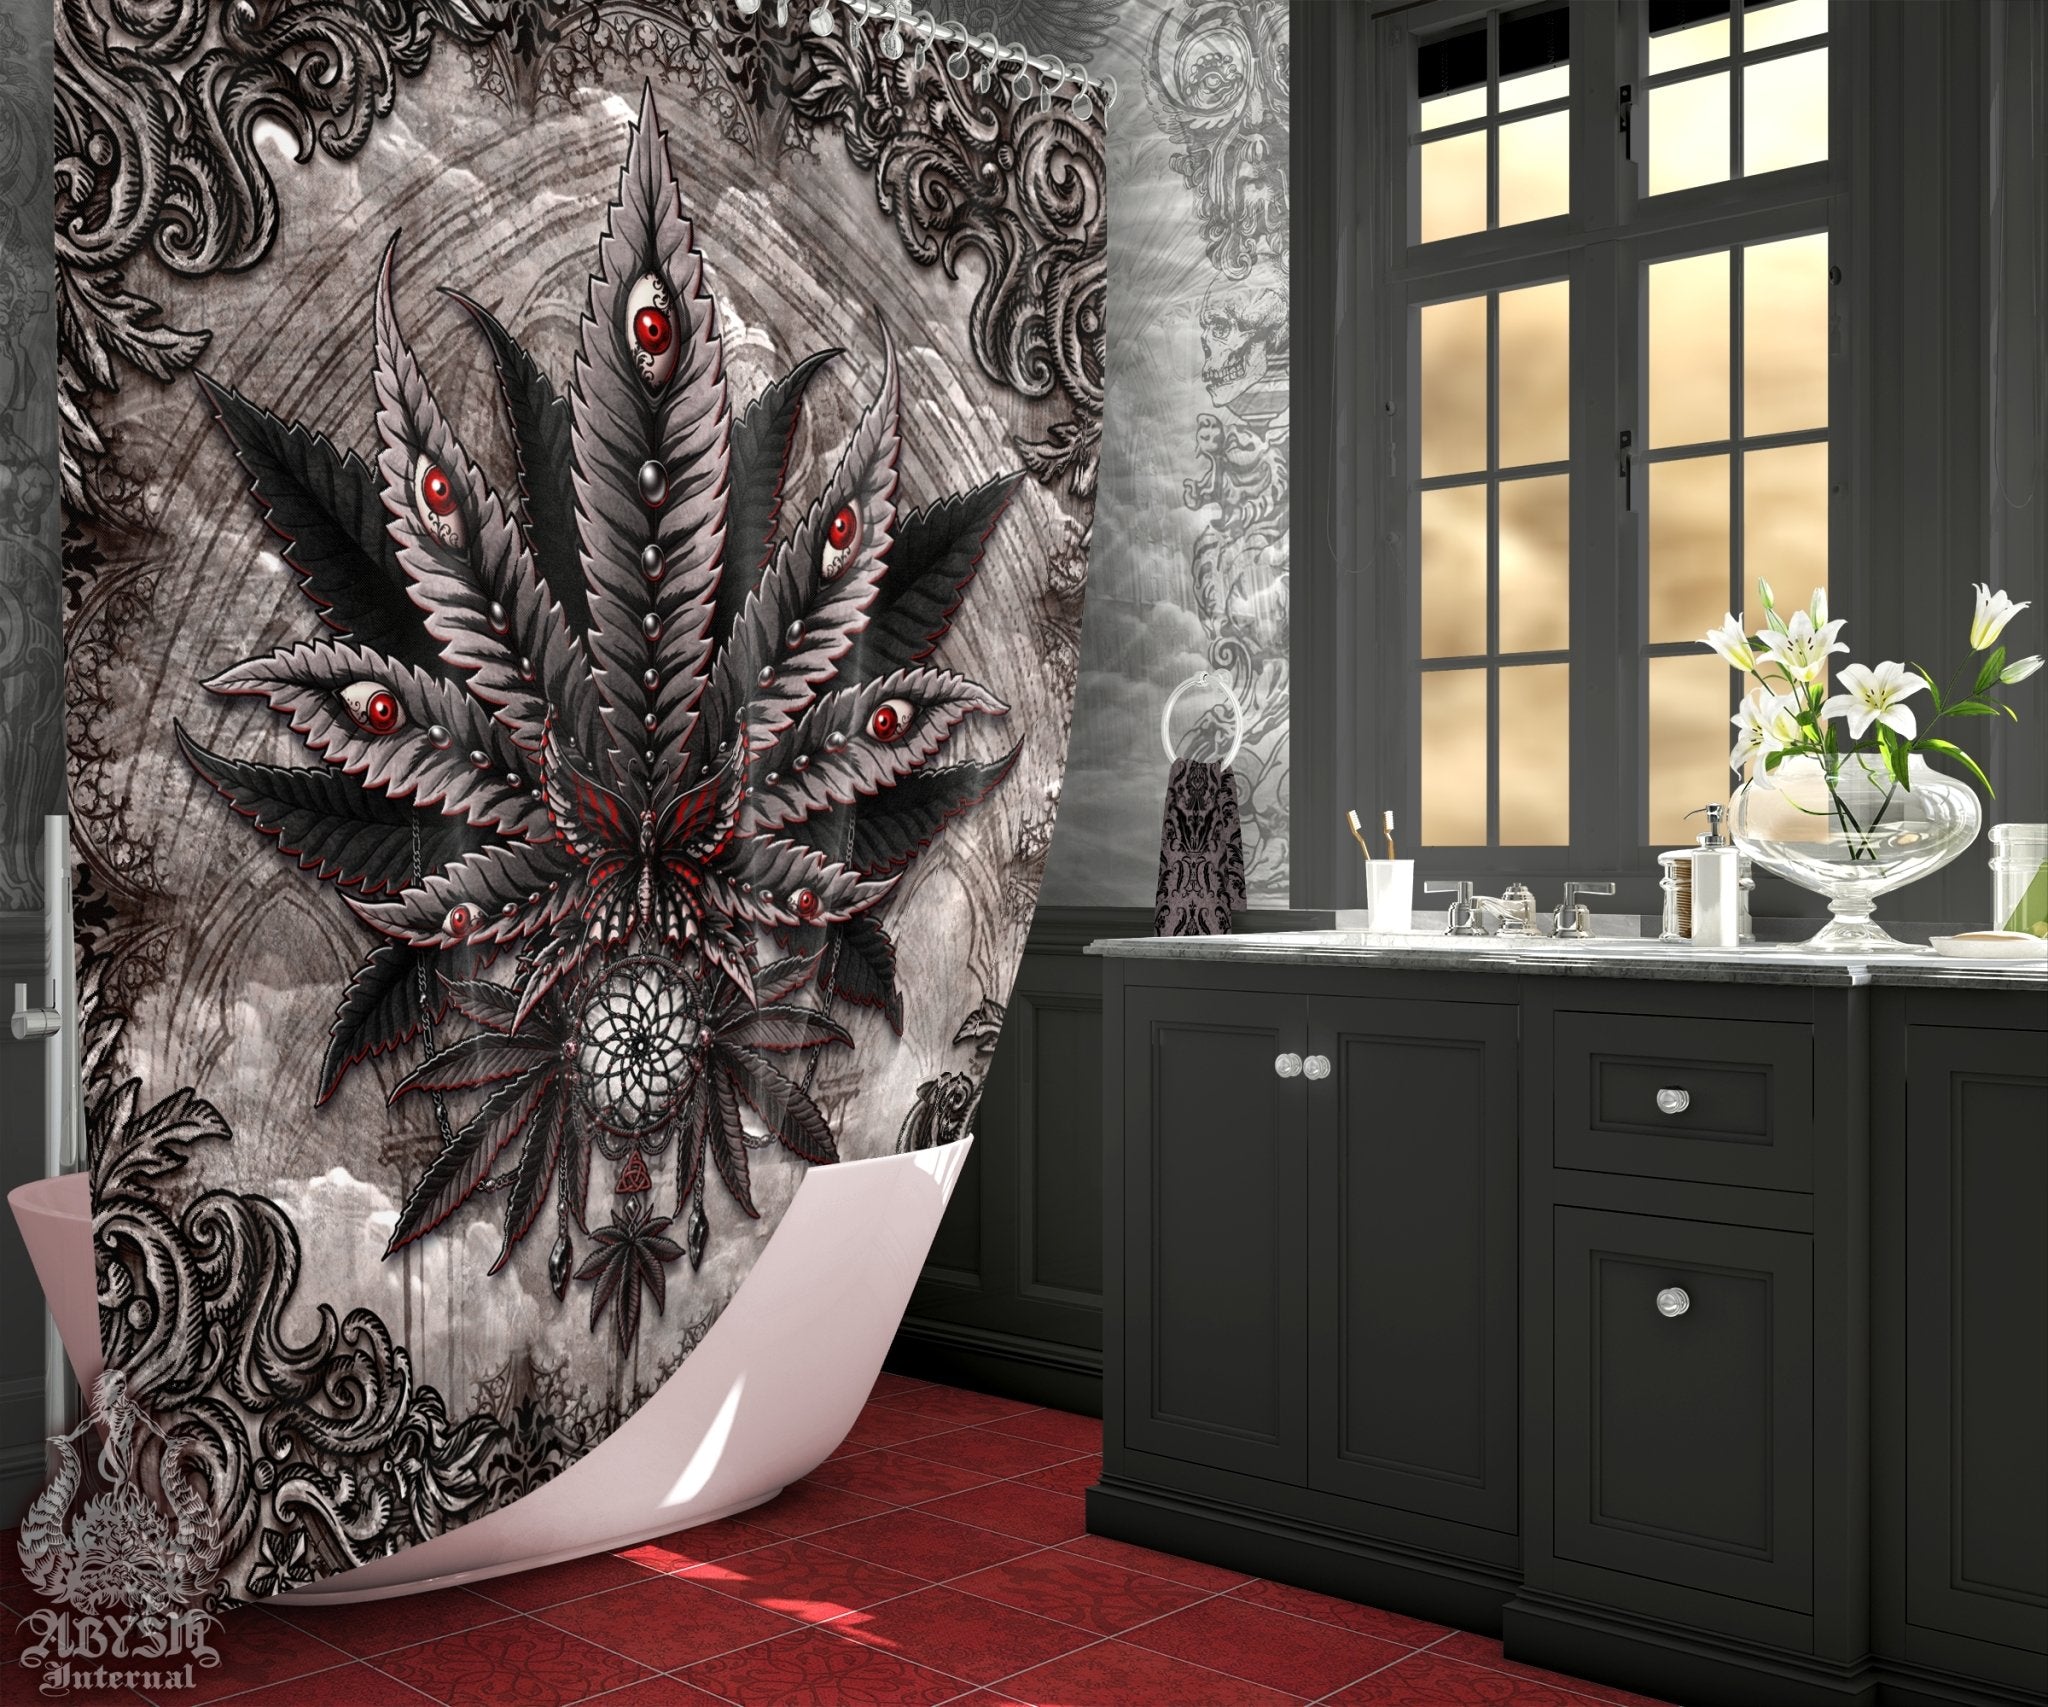 Weed Shower Curtain, Gothic Bathroom Decor, Cannabis Print, Alternative 420 Home Art - Marijuana, Horror Goth Grey - Abysm Internal